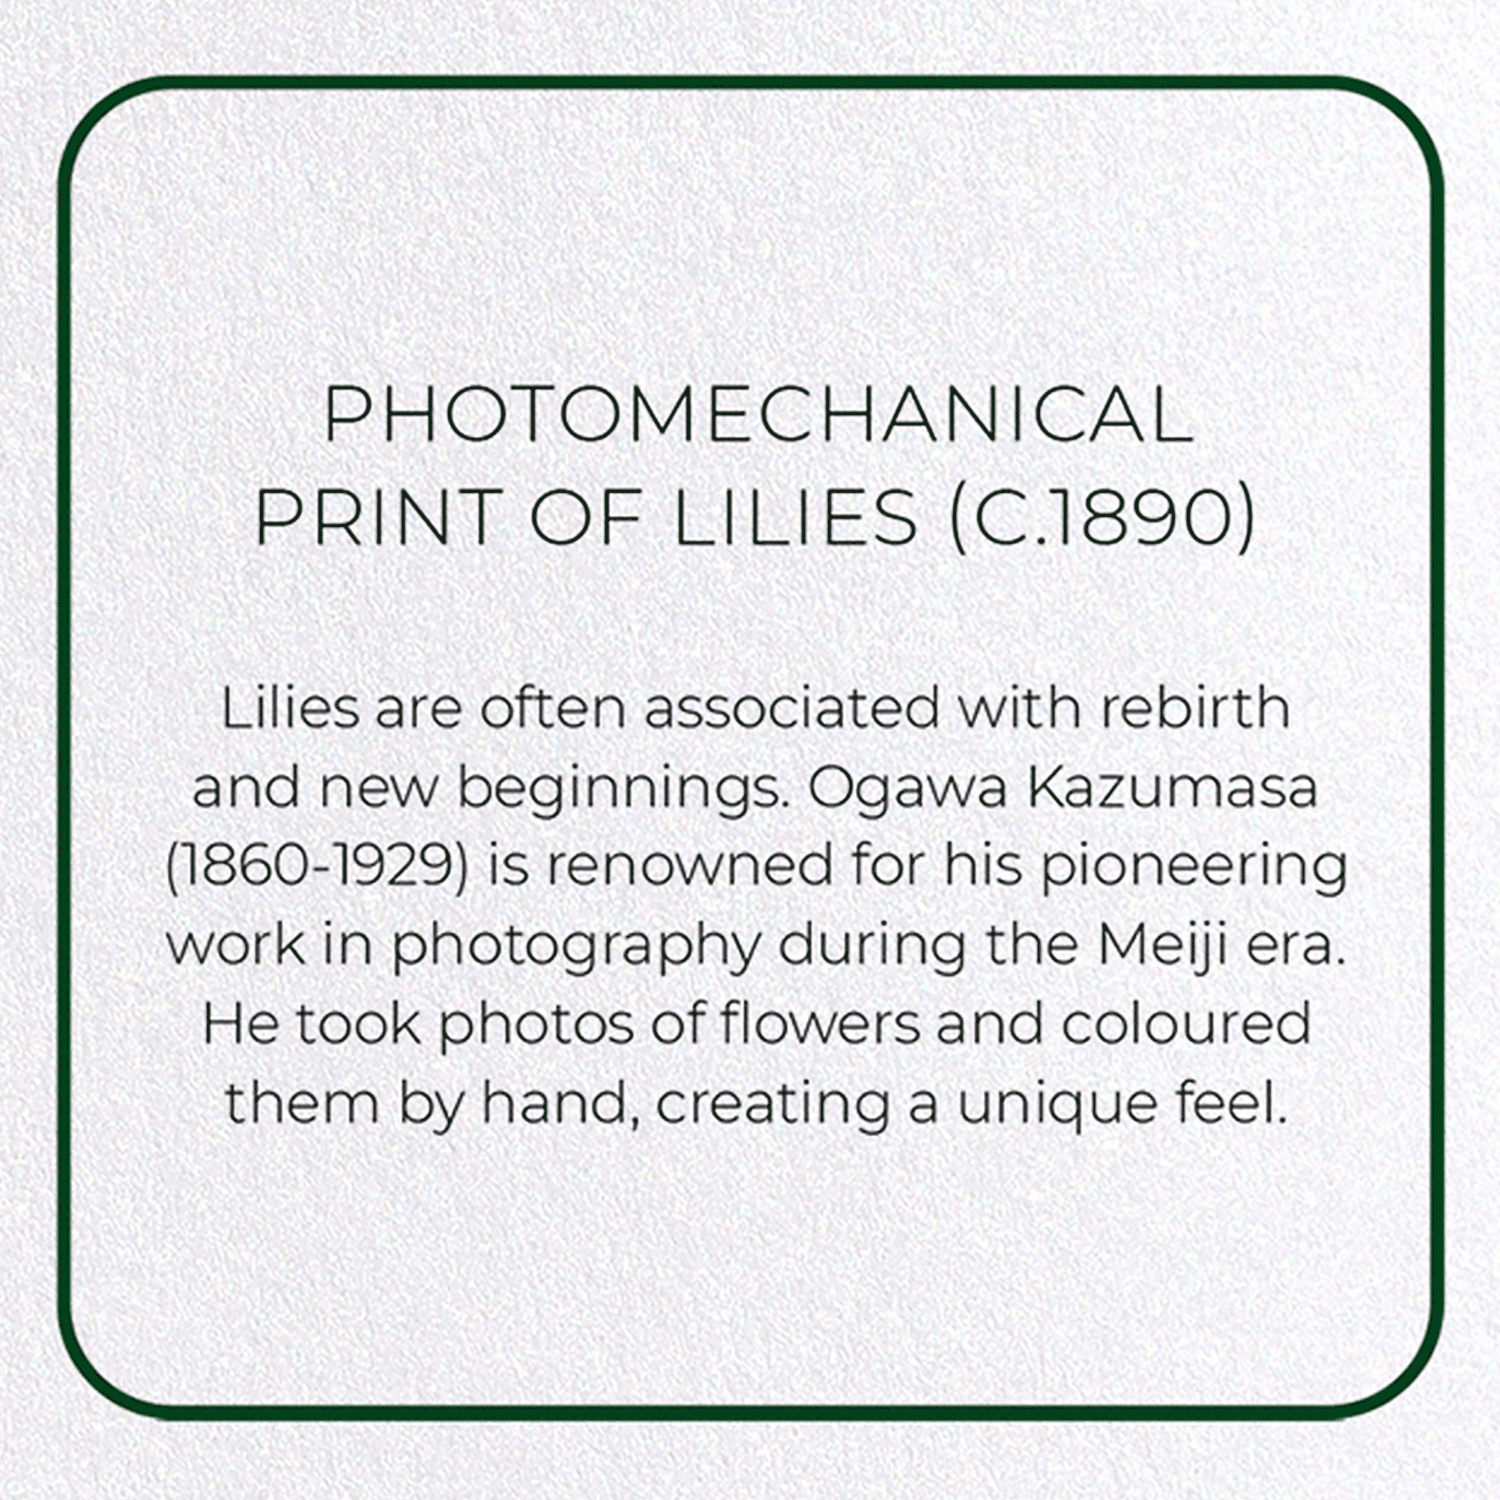 PHOTOMECHANICAL PRINT OF LILIES (C.1890)